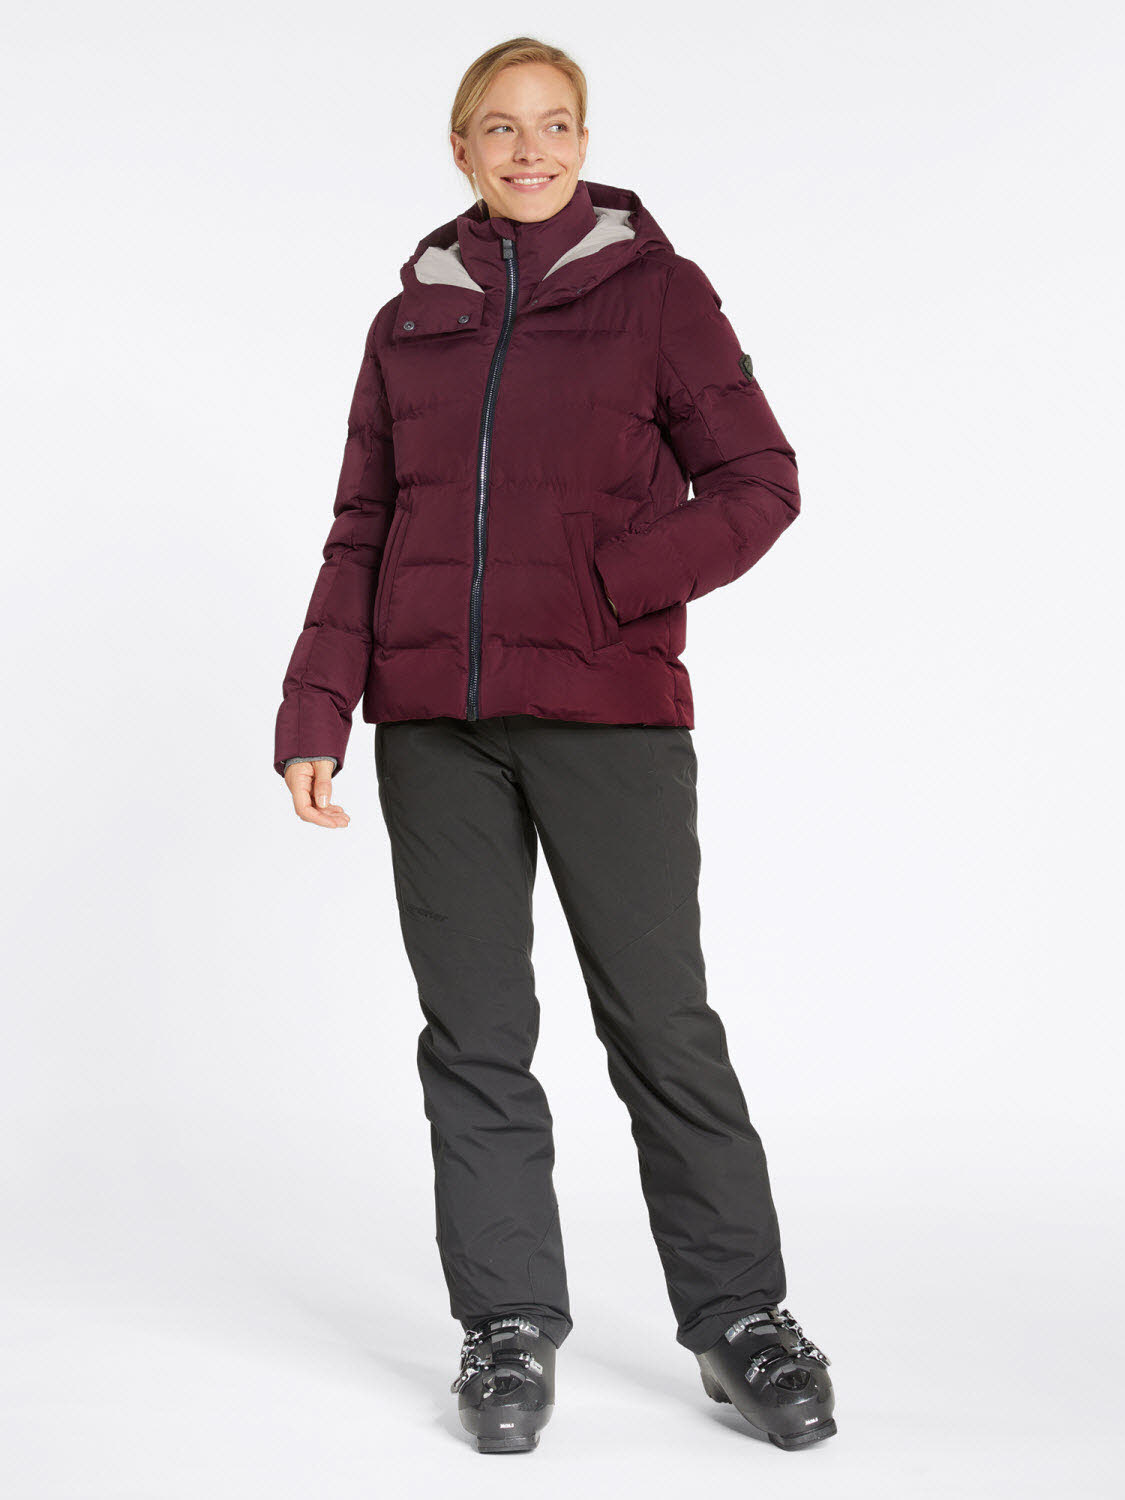 Ziener TUSJA lady (jacket ski)